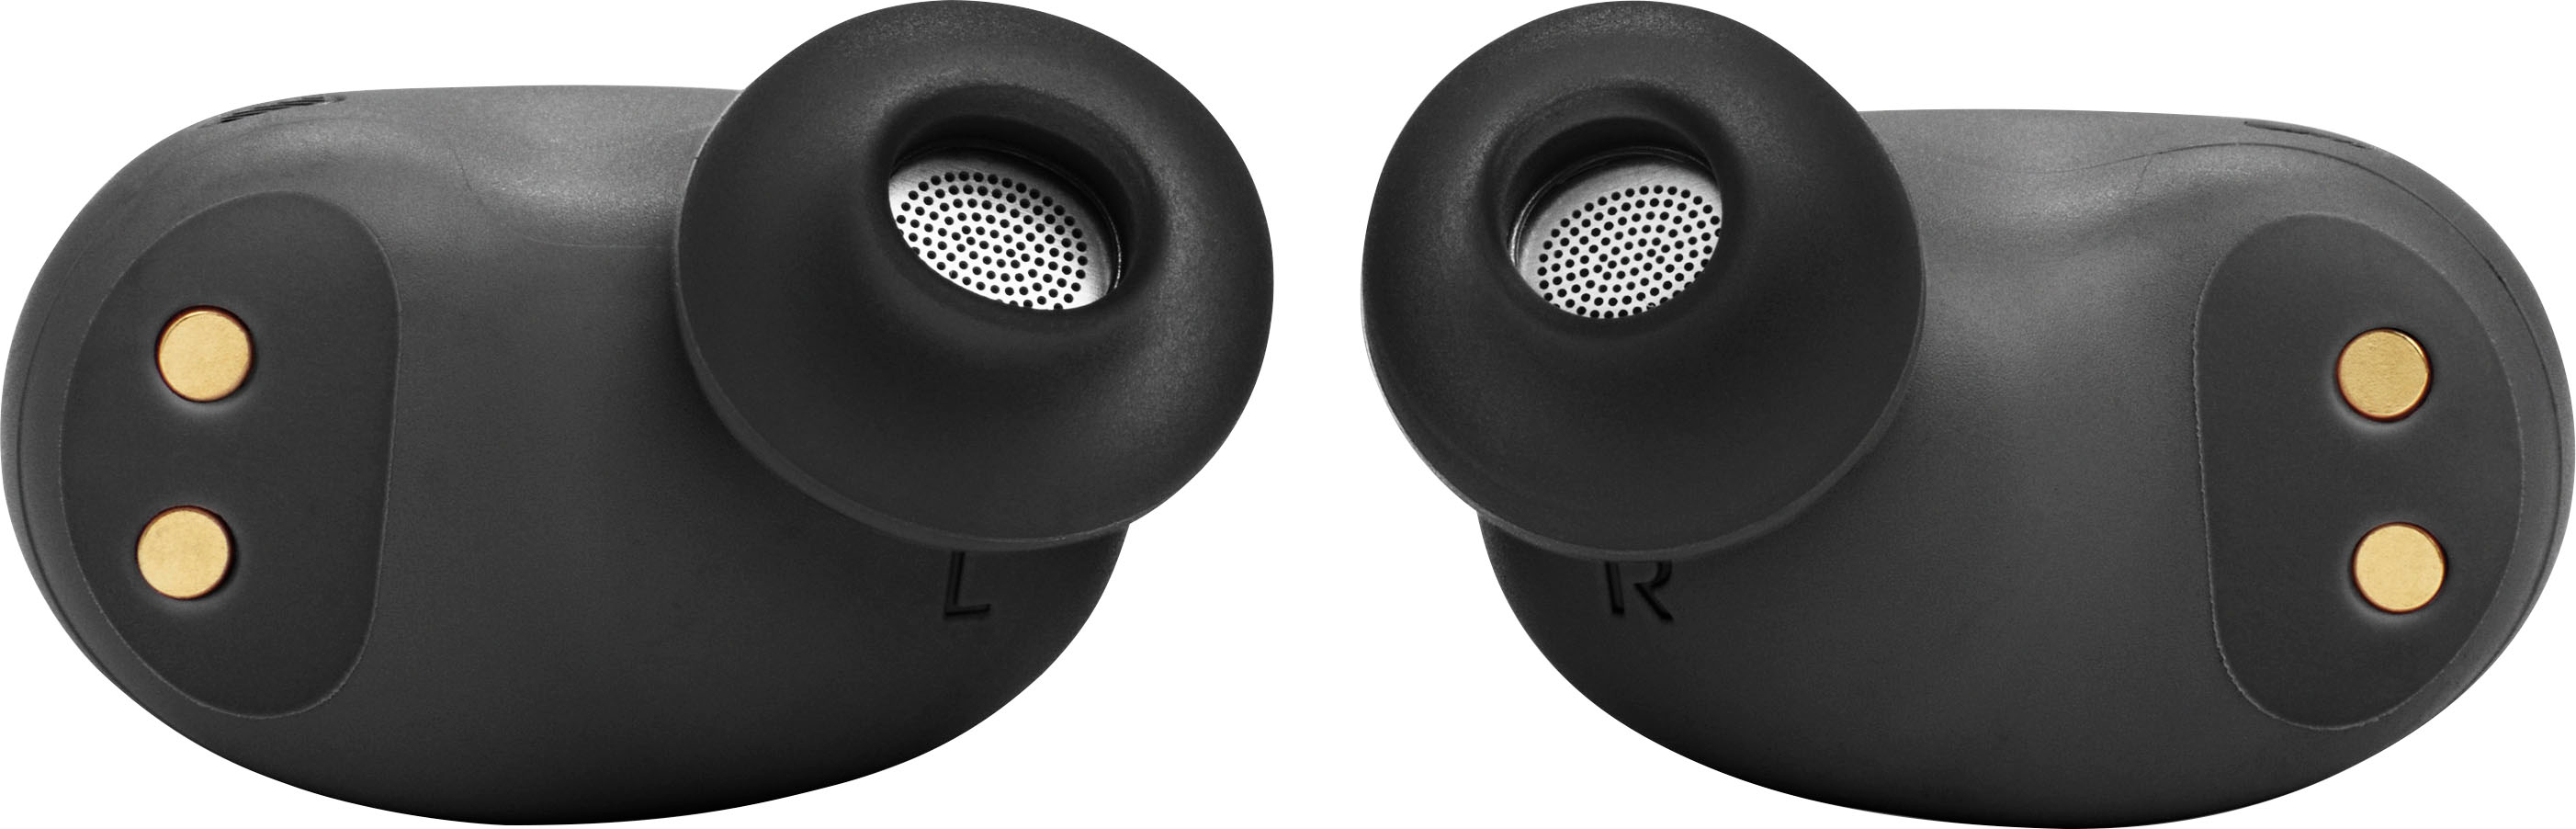 Left View: JBL - Endurance Peak True Wireless In-Ear Headphones - Black